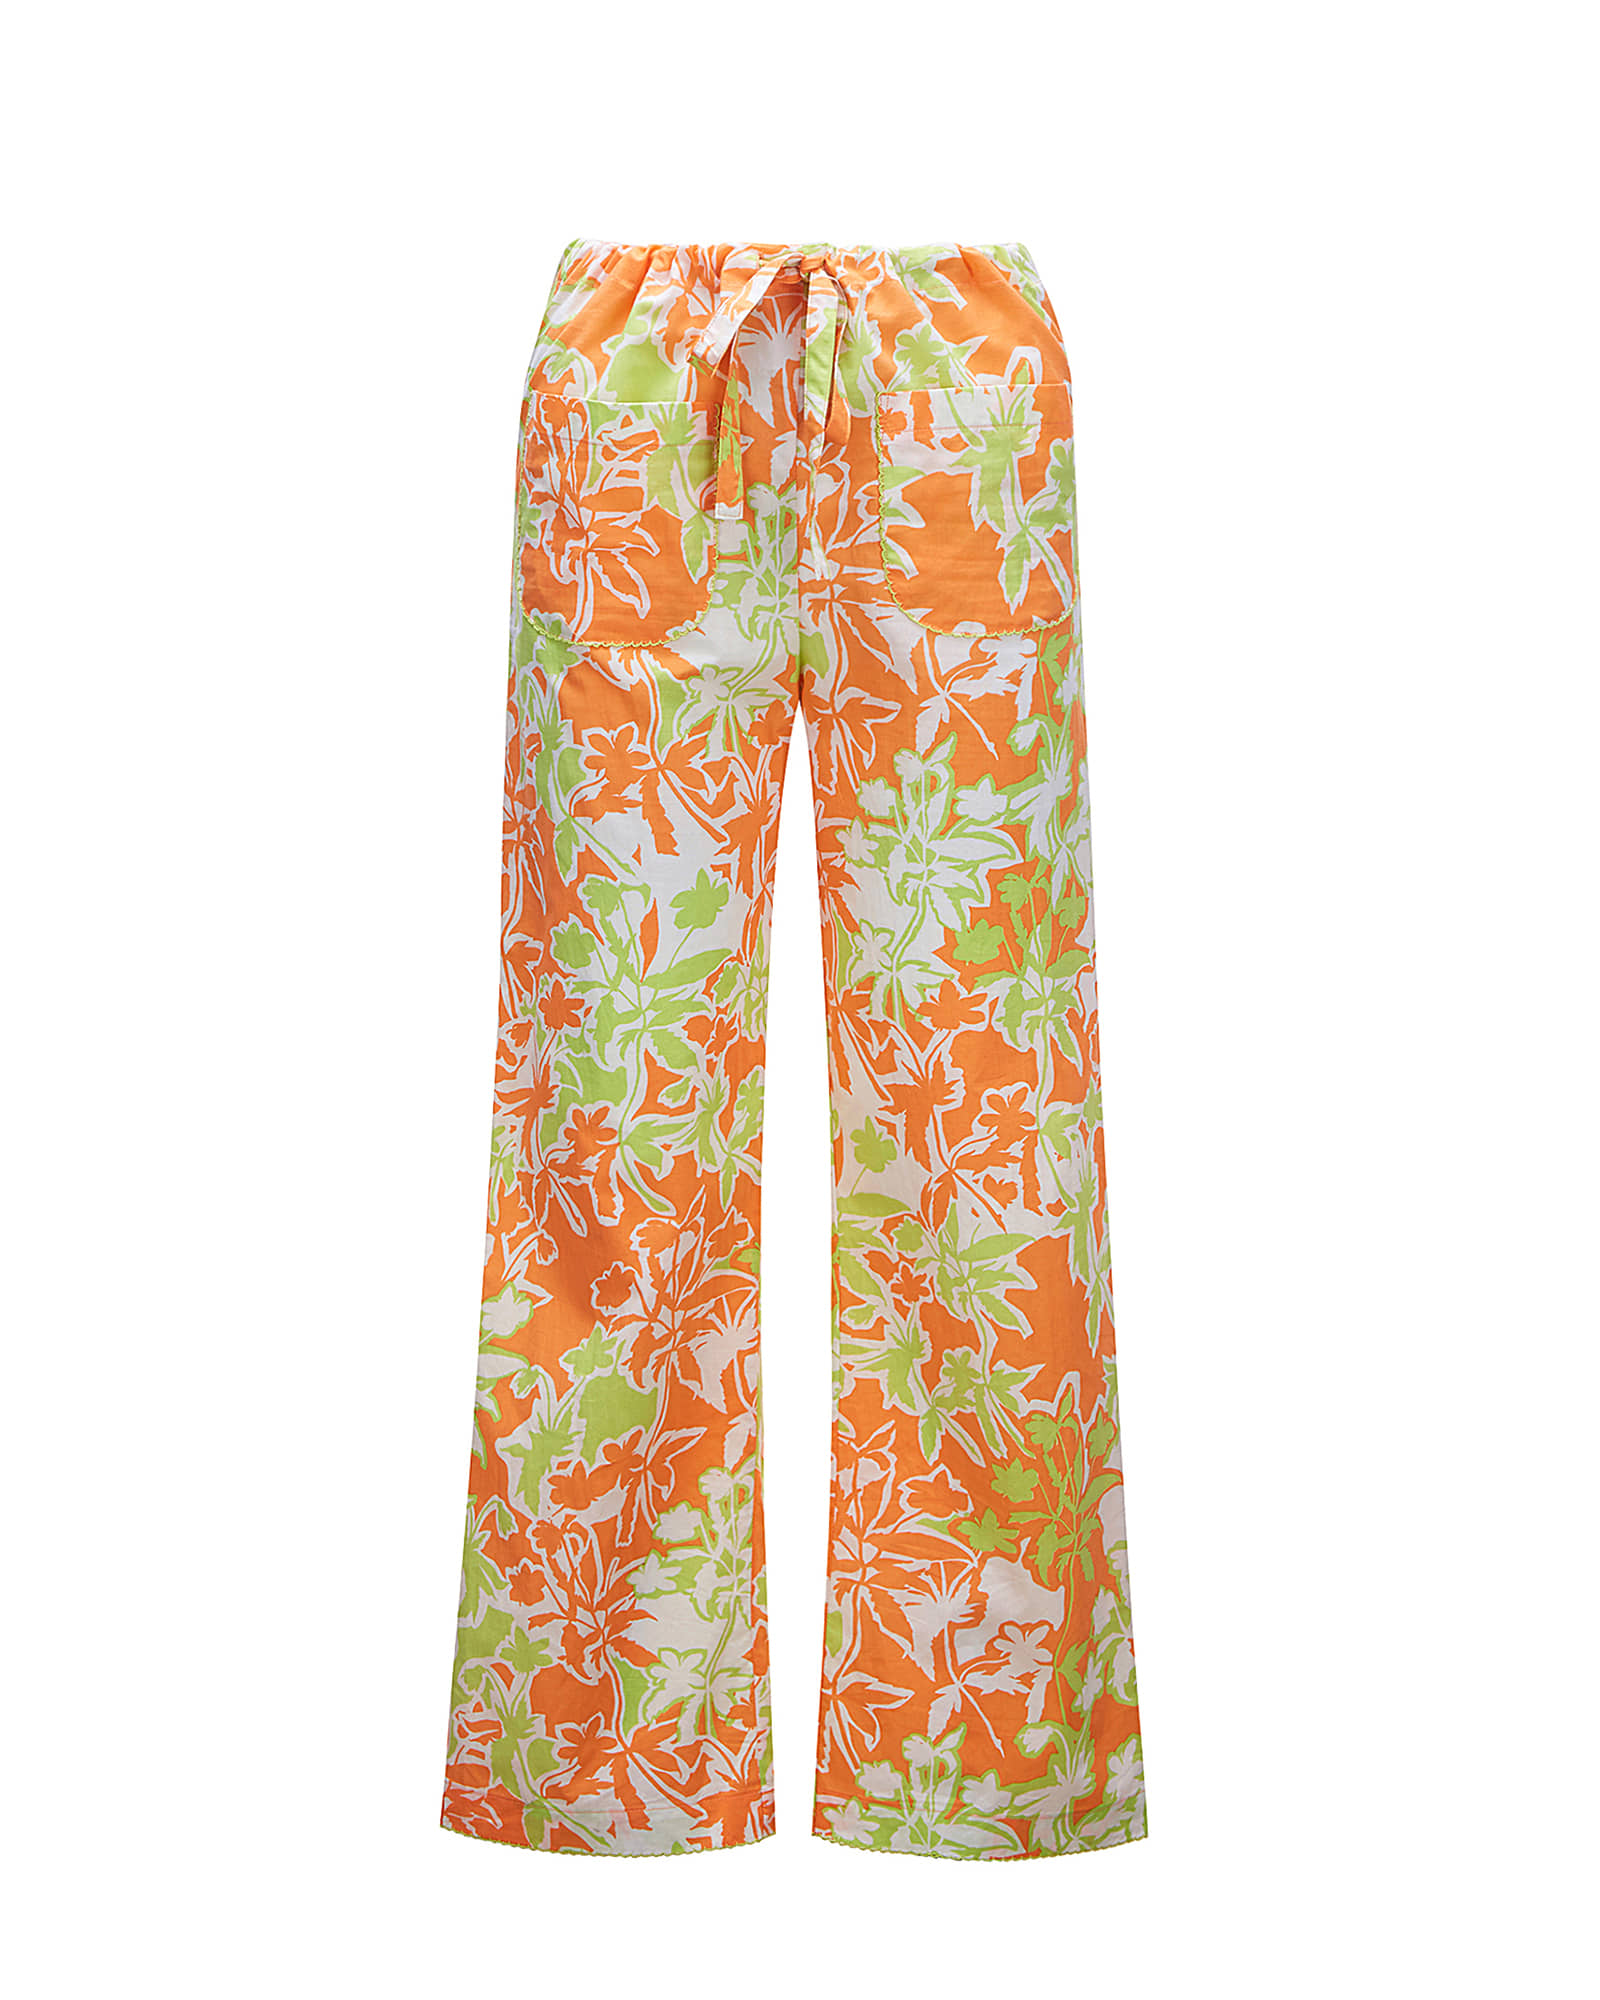 Sunny Ivy Pants (Papaya Orange)